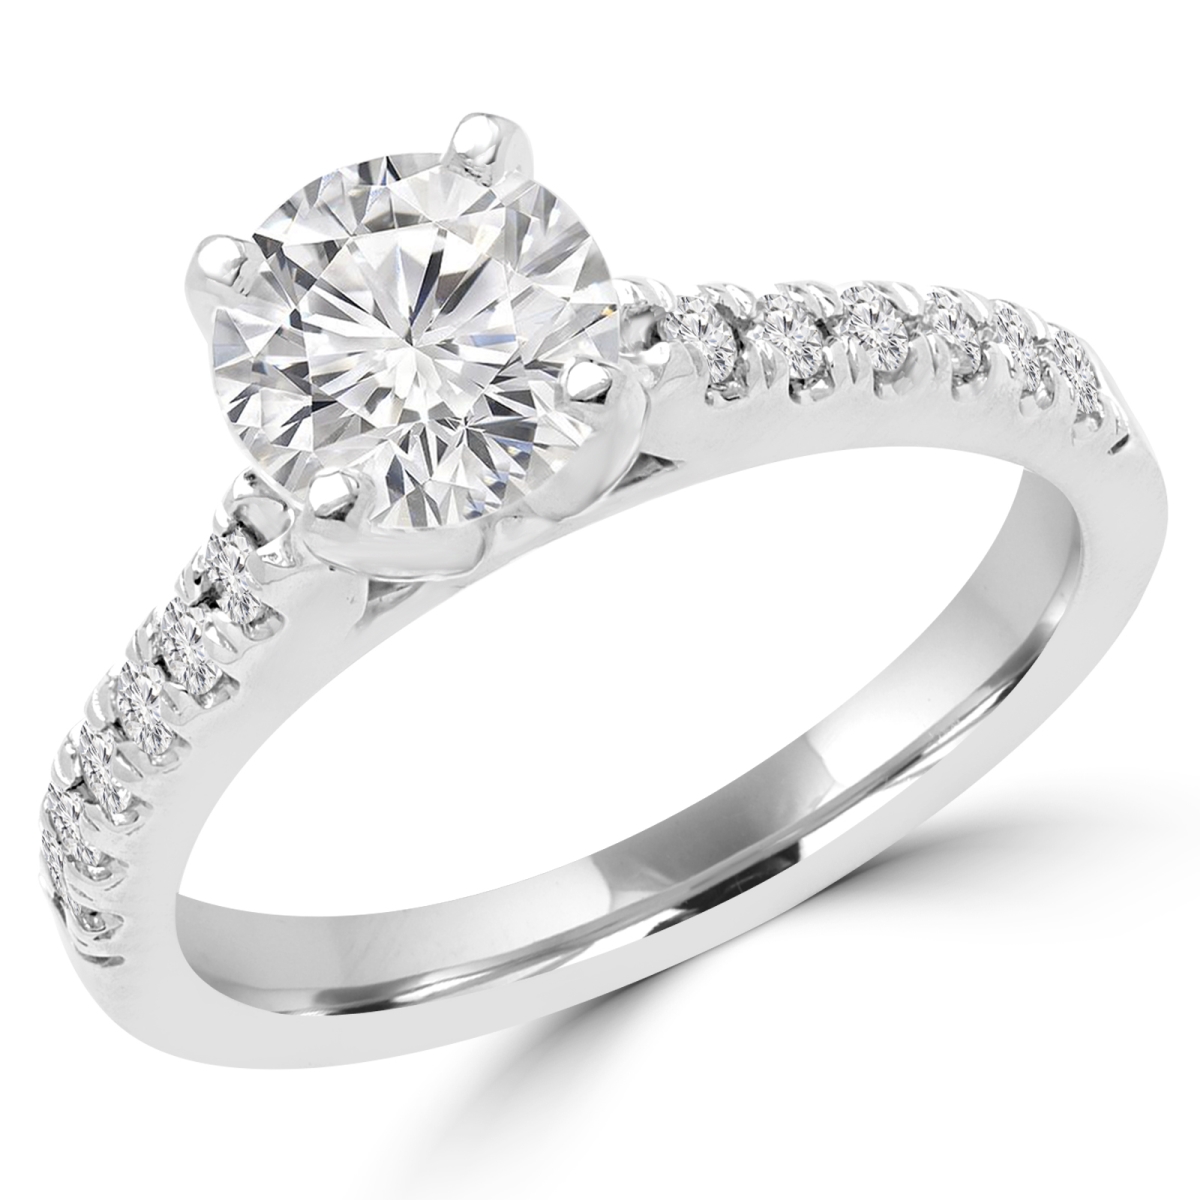 MD160214-3.25 0.8 CTW Multi-Stone Round Diamond Engagement Ring in 14K White Gold - Size 3.25 -  Majesty Diamonds